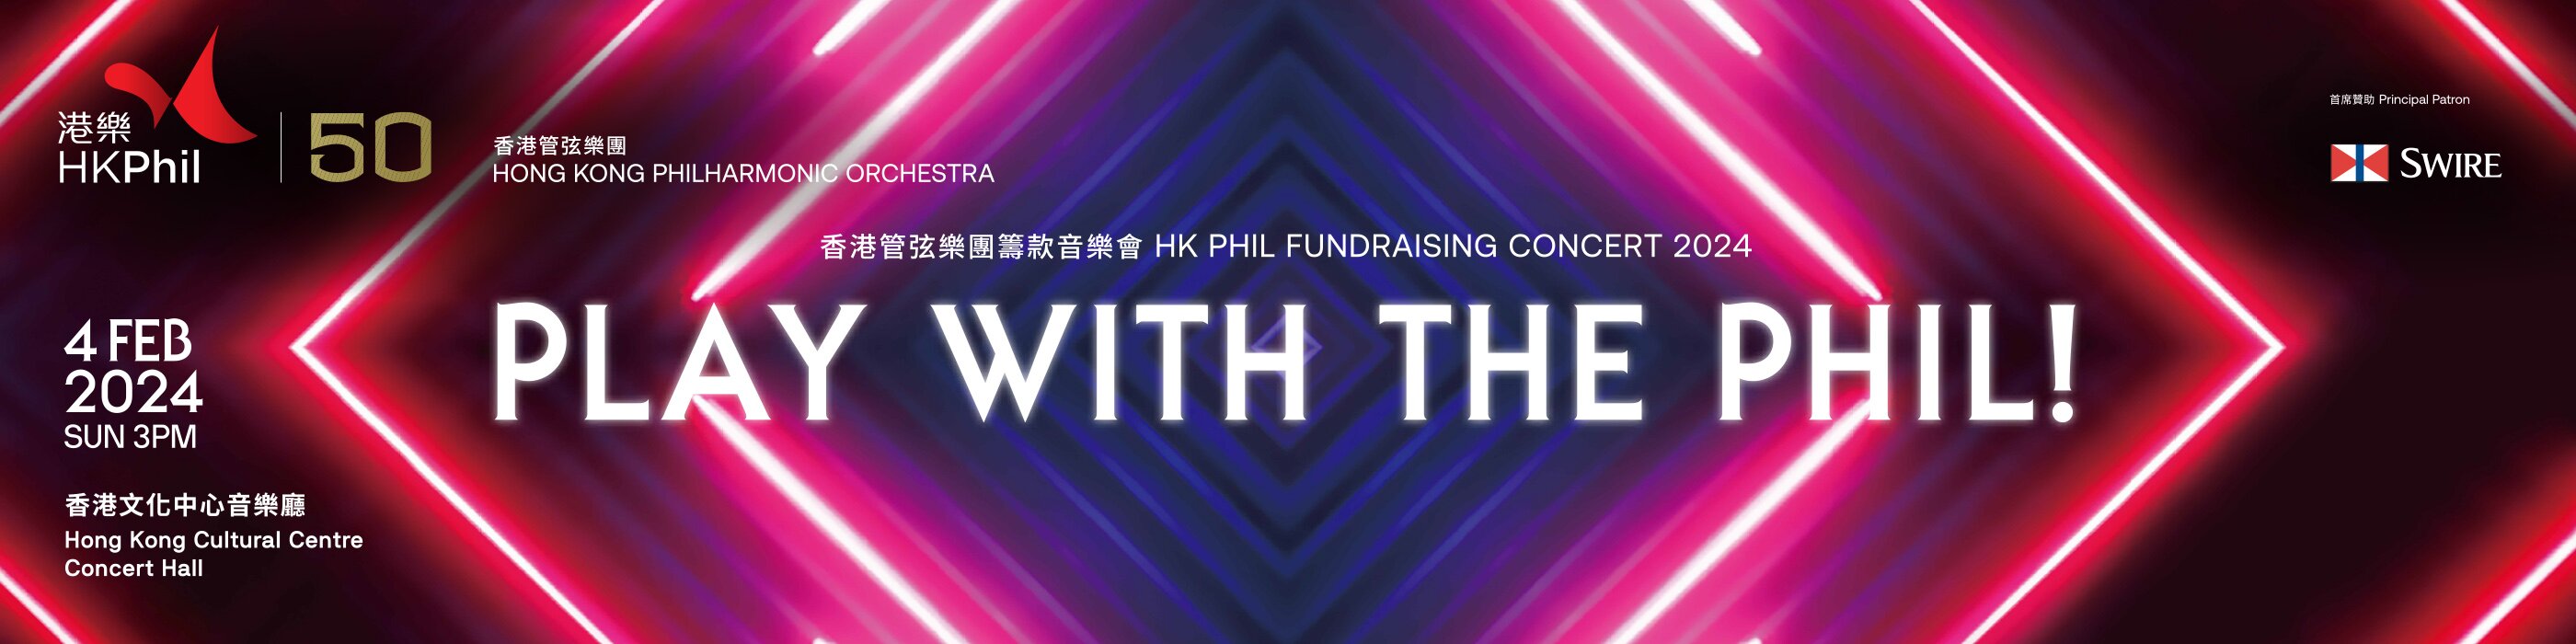 HK Phil Fundraising Concert 2024